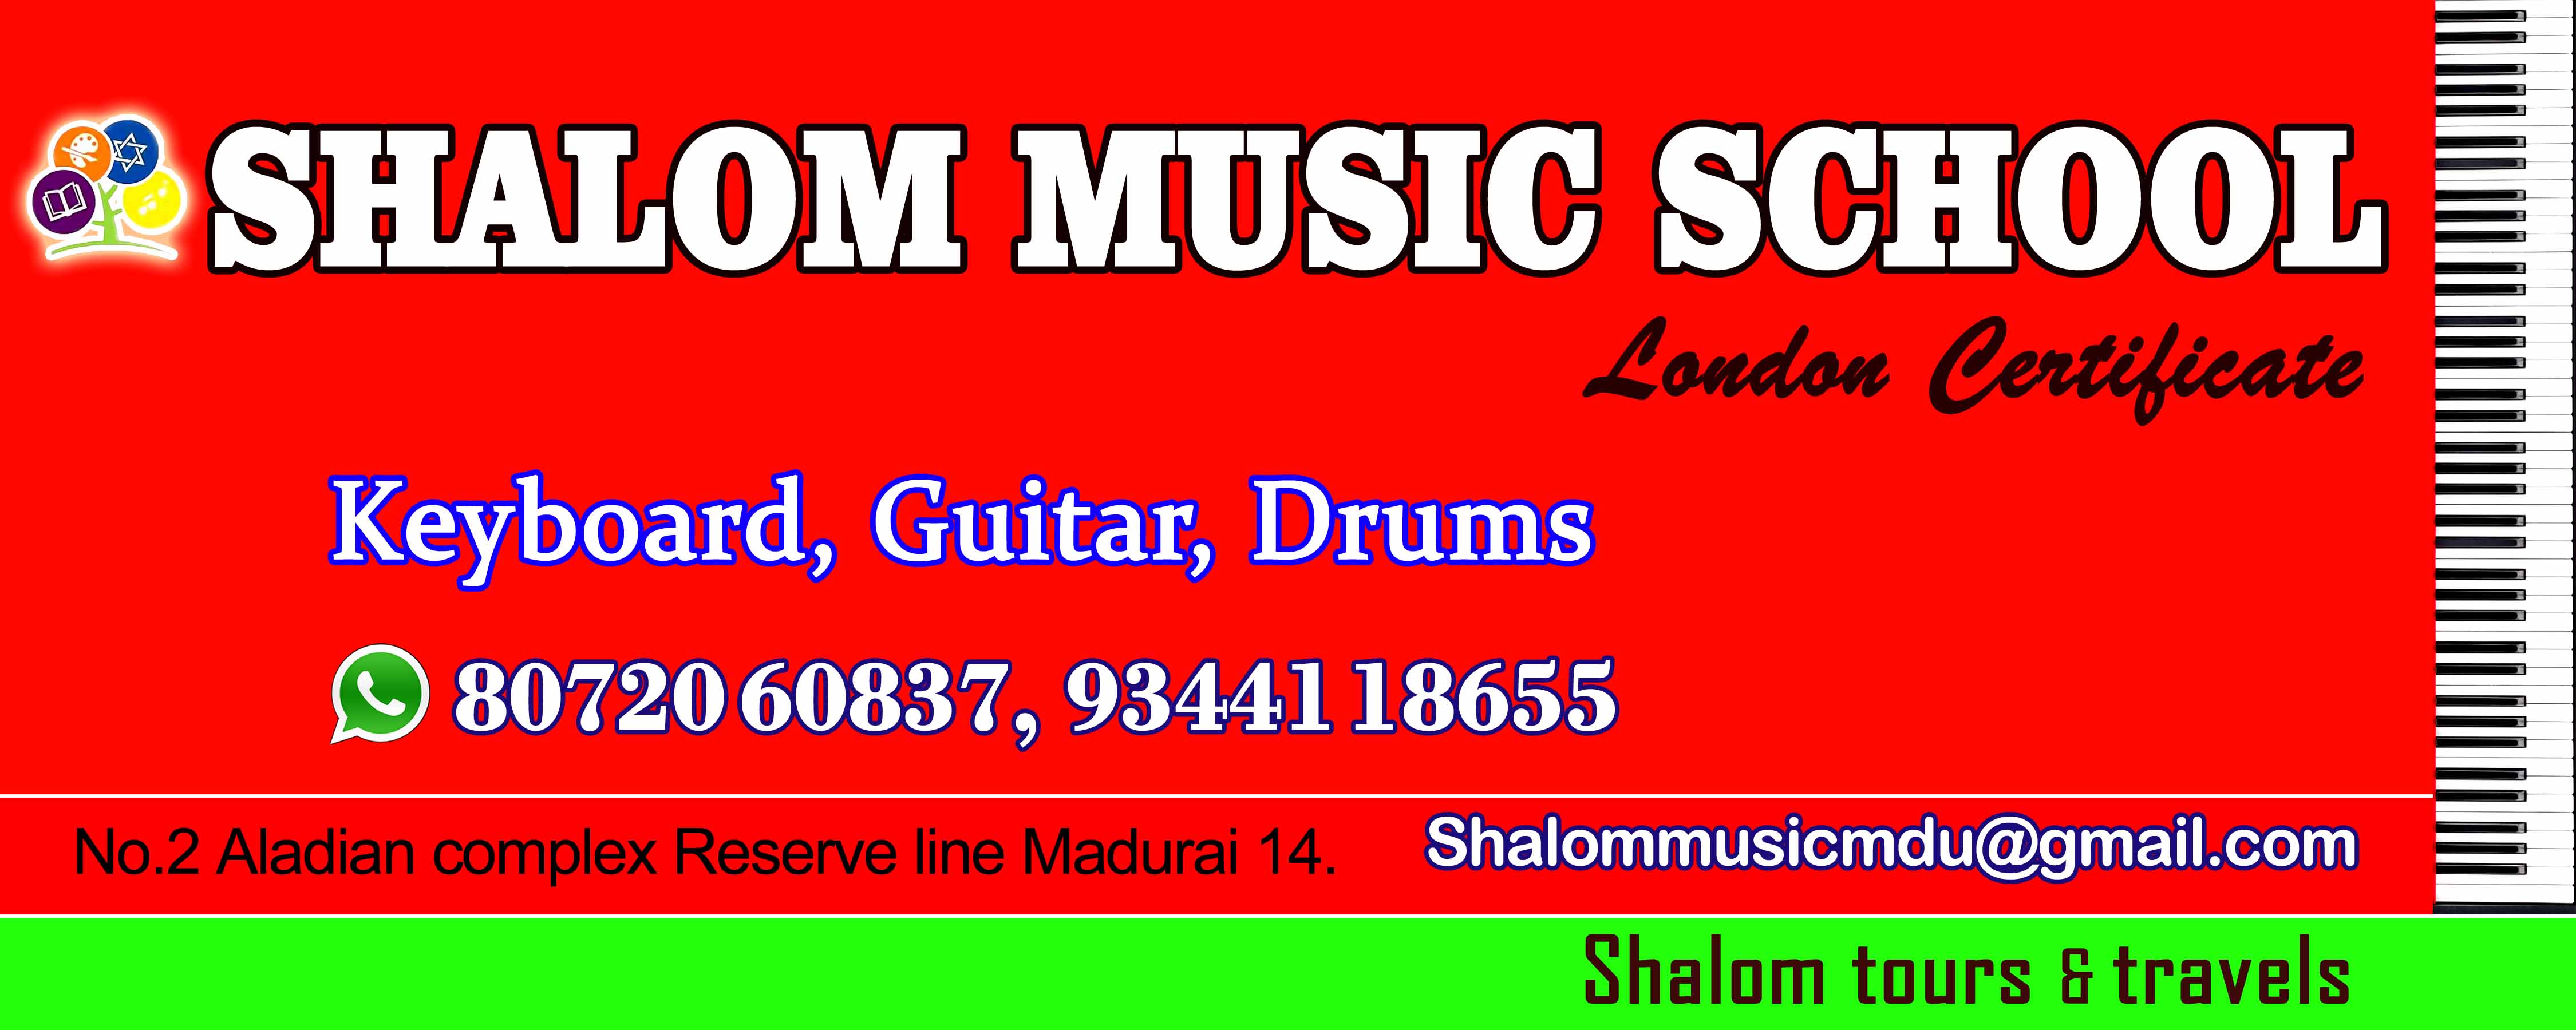 Shalom Music School Madurai